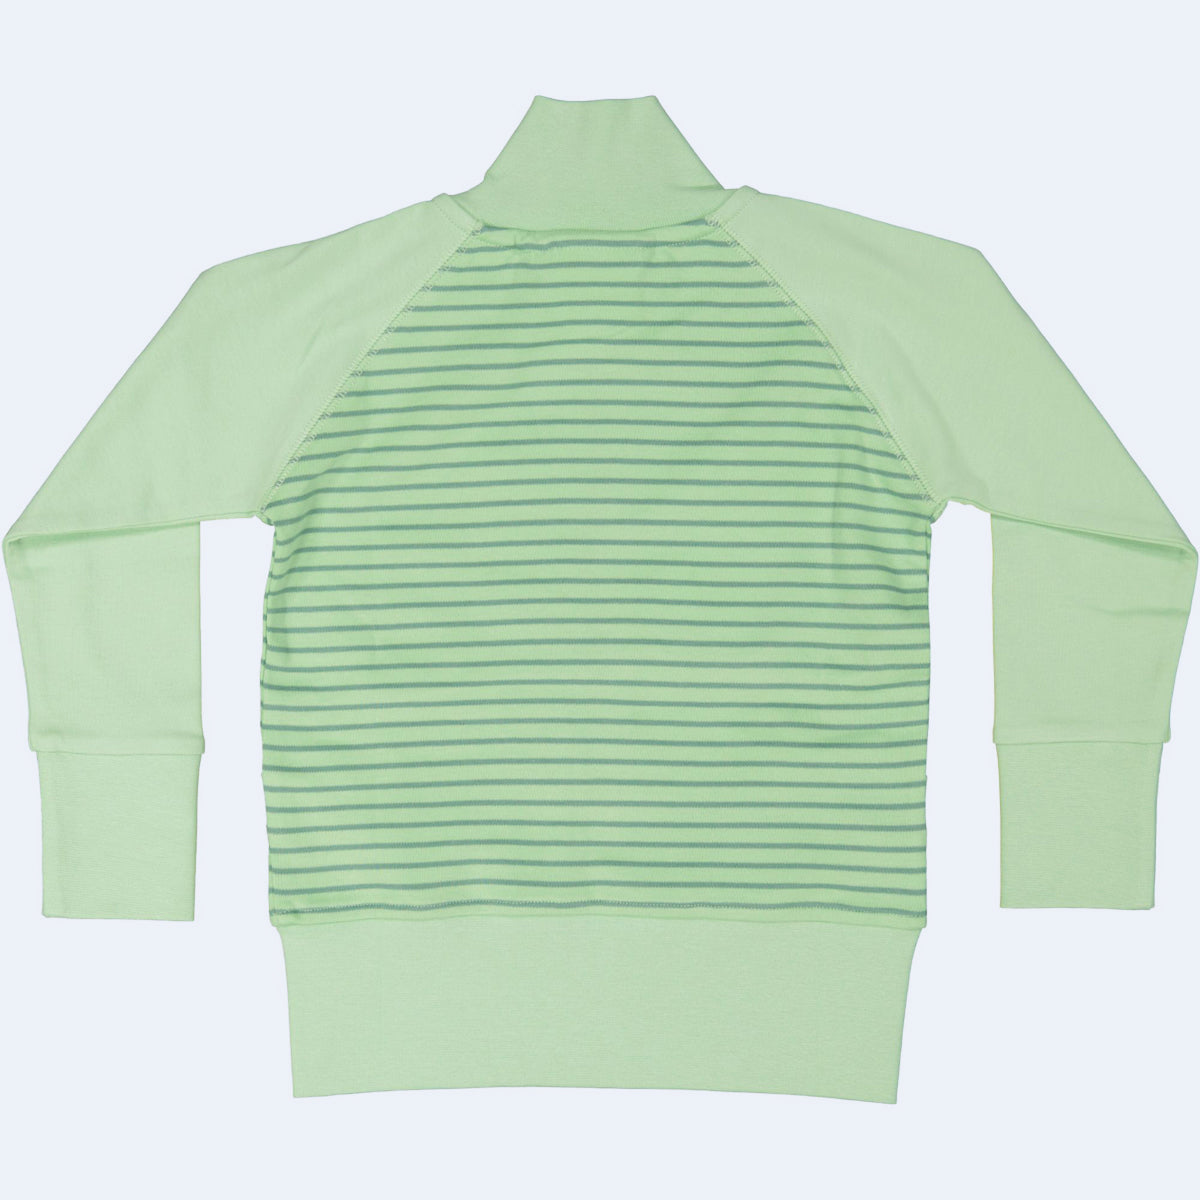 Geggamoja®  "Zipsweater" in Organic Cotton - LIME GREEN STRIPE, sizes up to 8 yr.